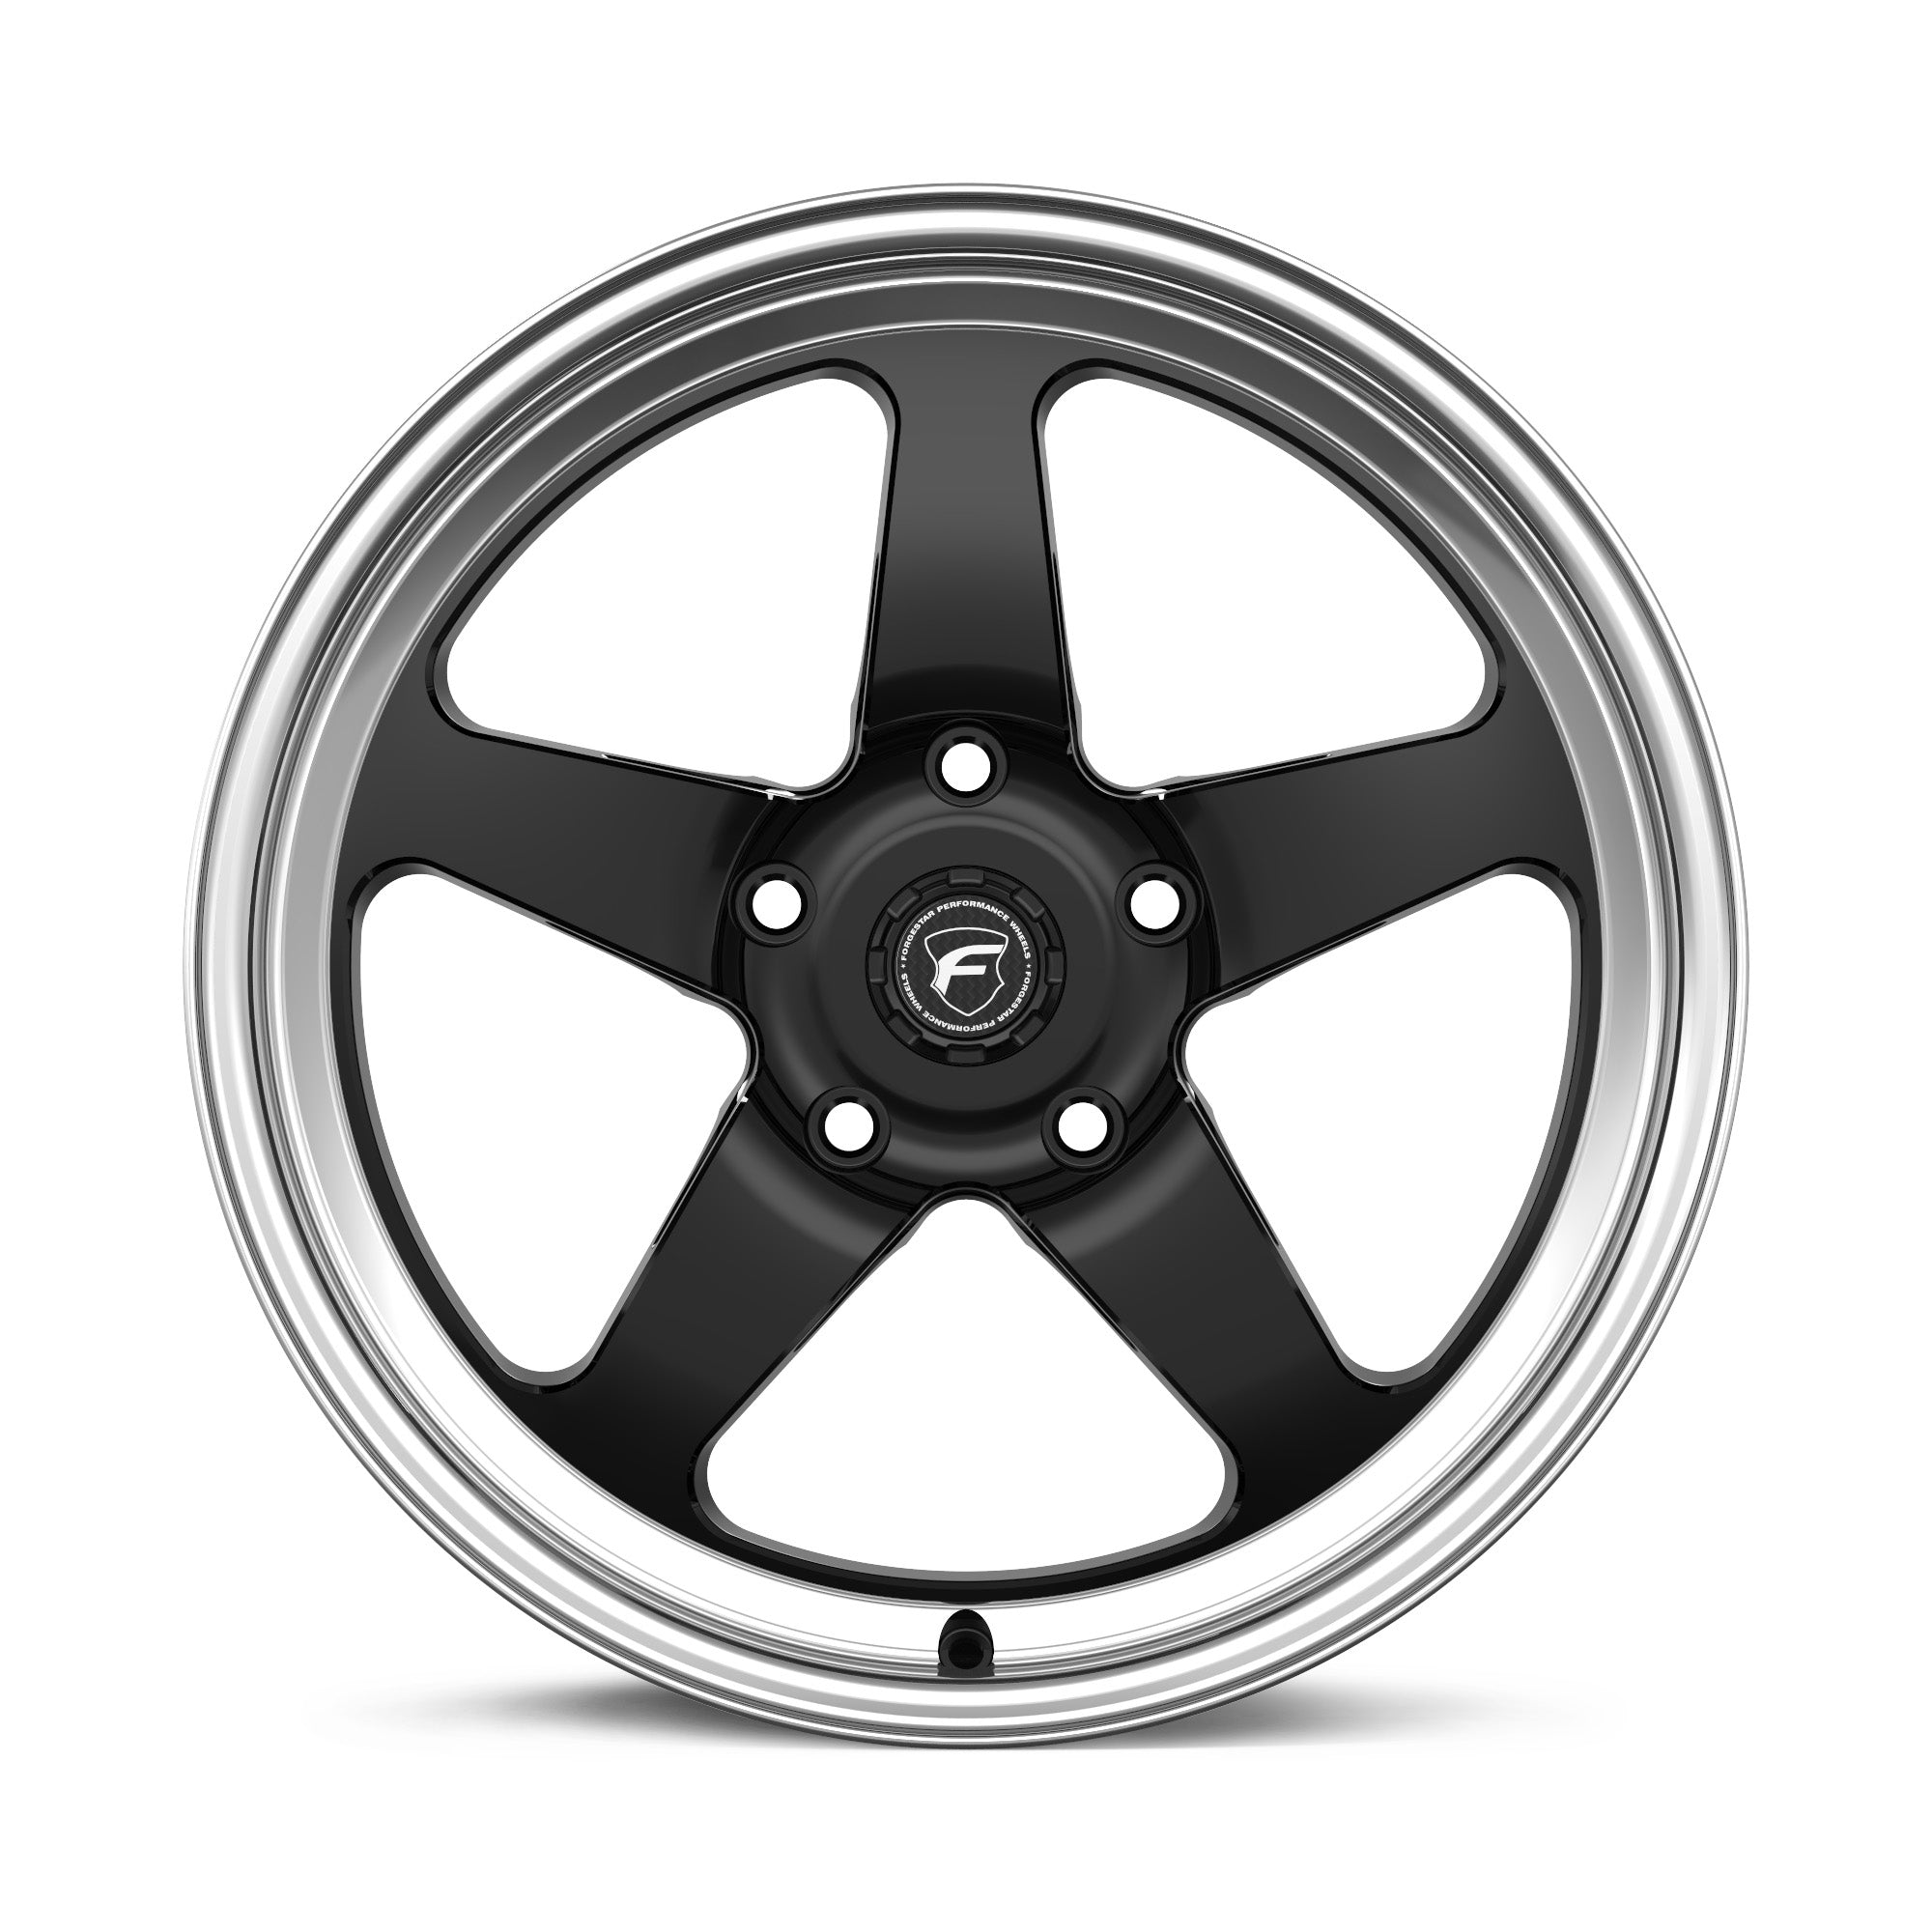 Forgestar D5 Drag Racing Wheels - Gloss Black w/Machined Lip - 17x11 - Sold Individually - Motorsports LA